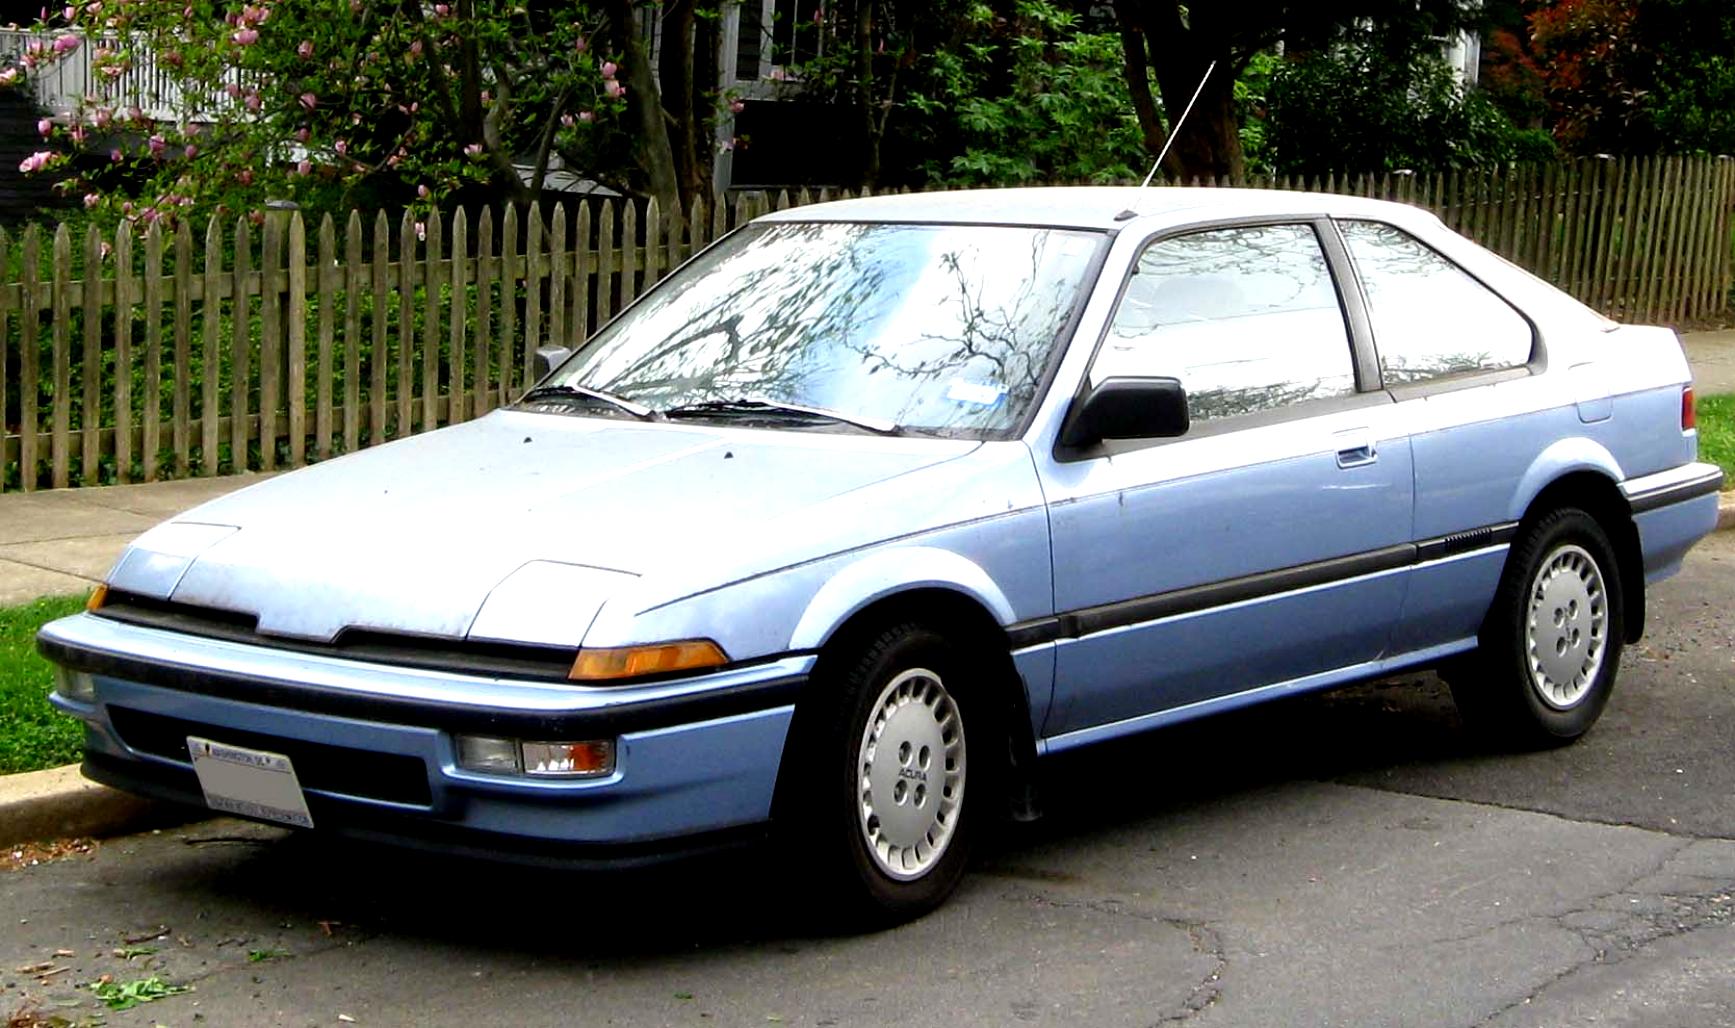 Acura Integra Sedan 1989 #1